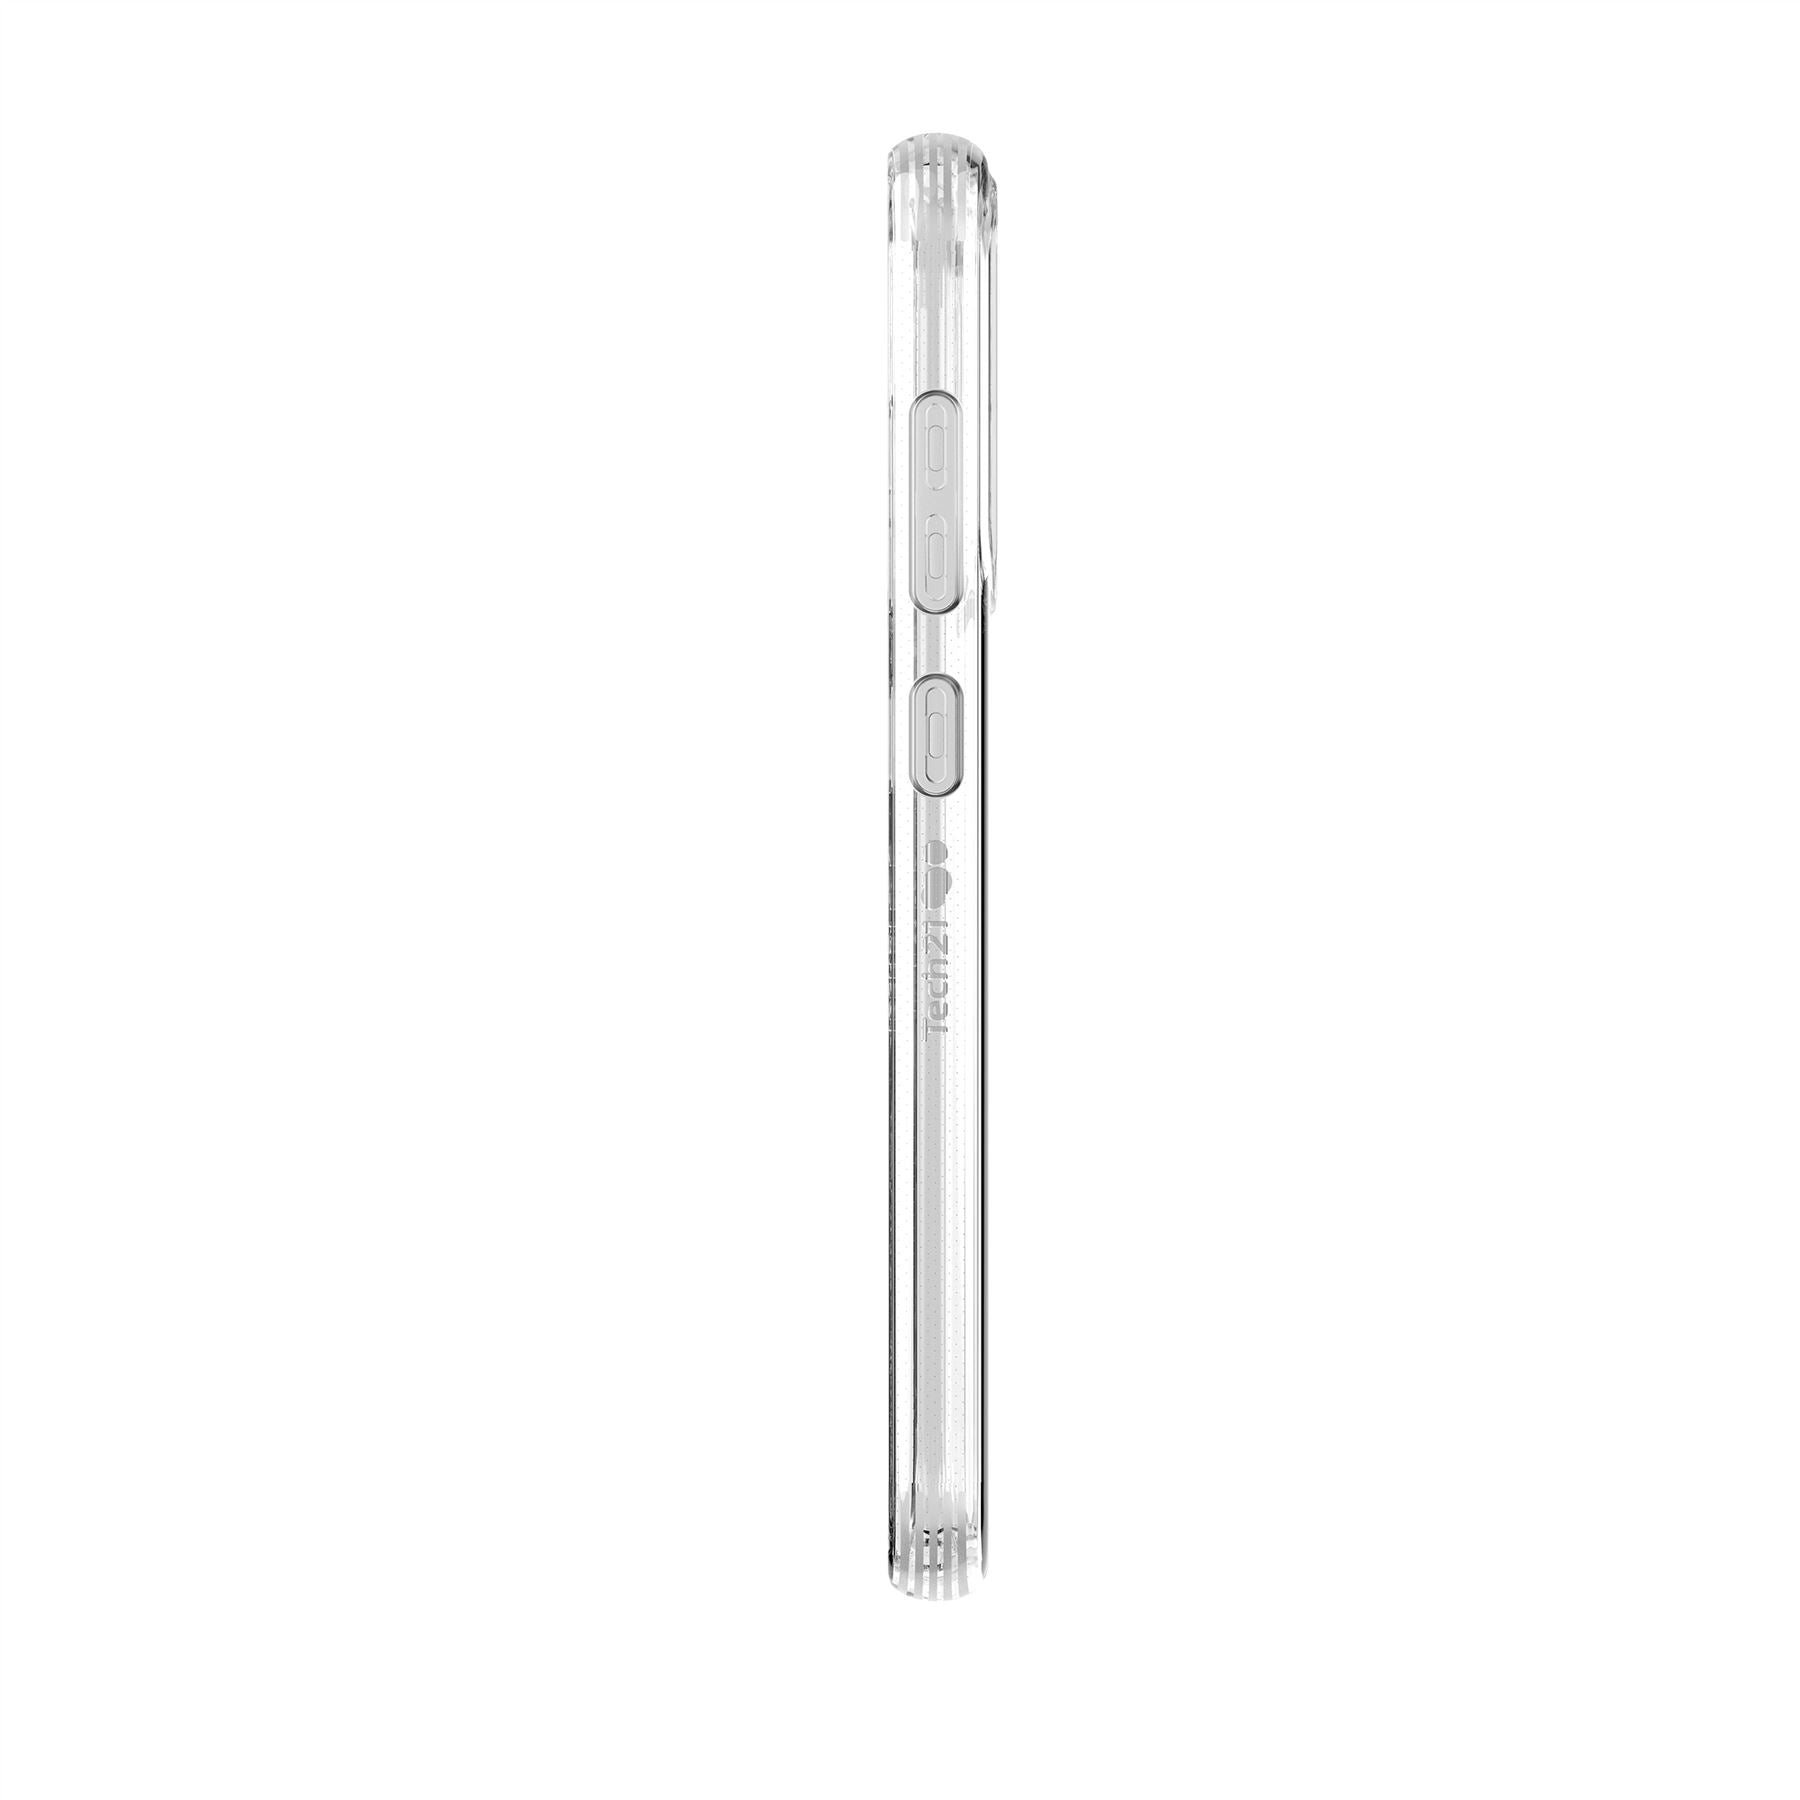 Evo Lite - Samsung Galaxy A52 5G Case - Clear